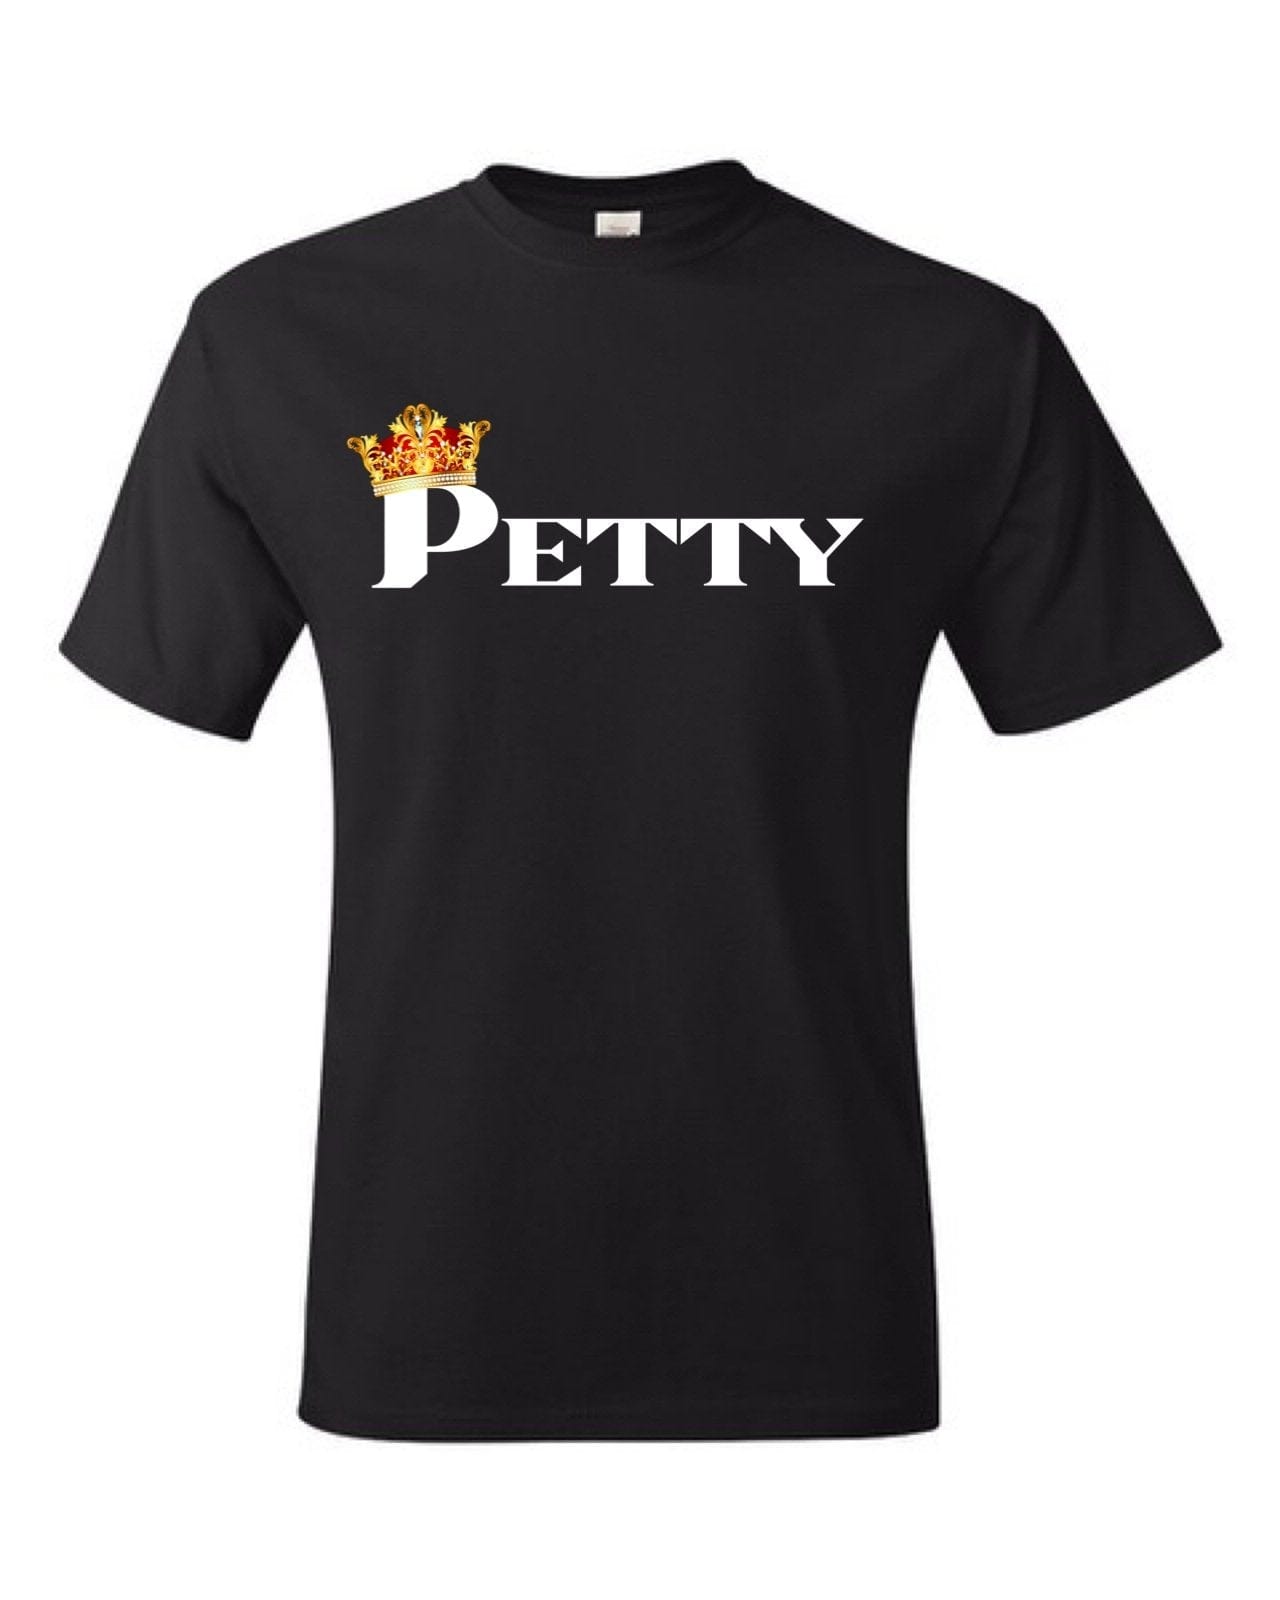 InsensitiviTees Shirts S / Black Petty King